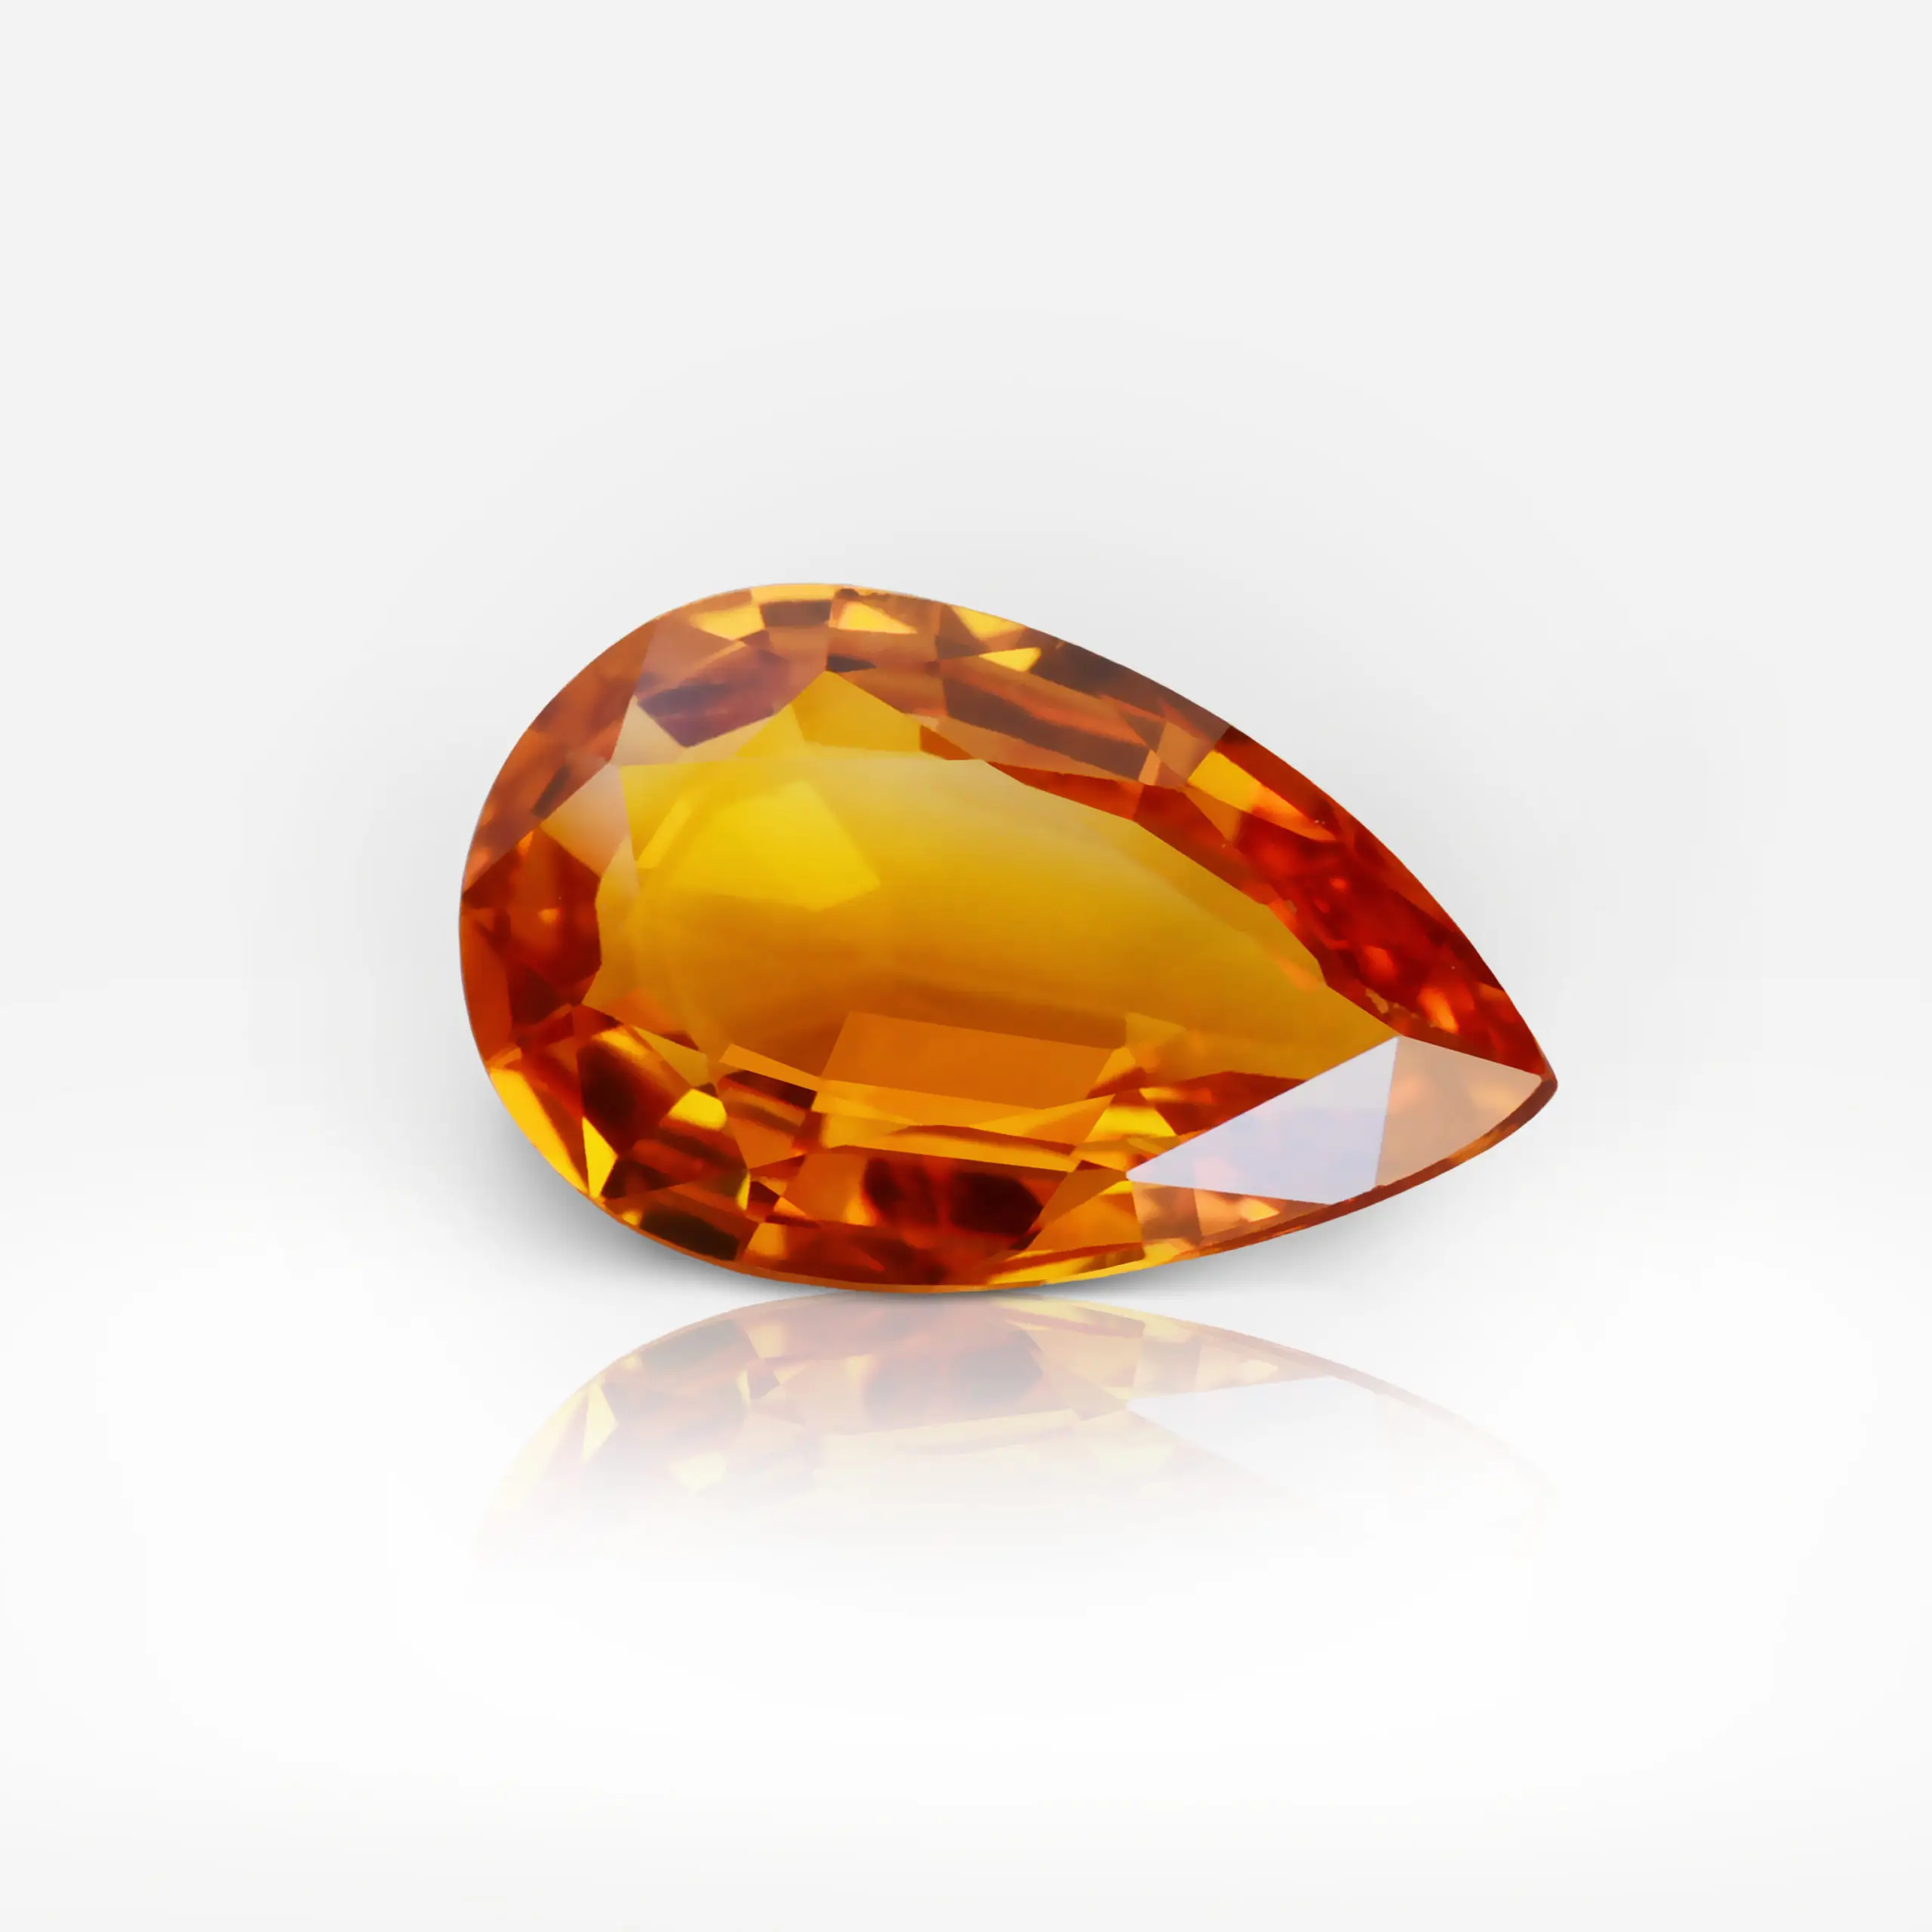 2.37 carat Pear Shape Sri Lankan Orange Sapphire - picture 1